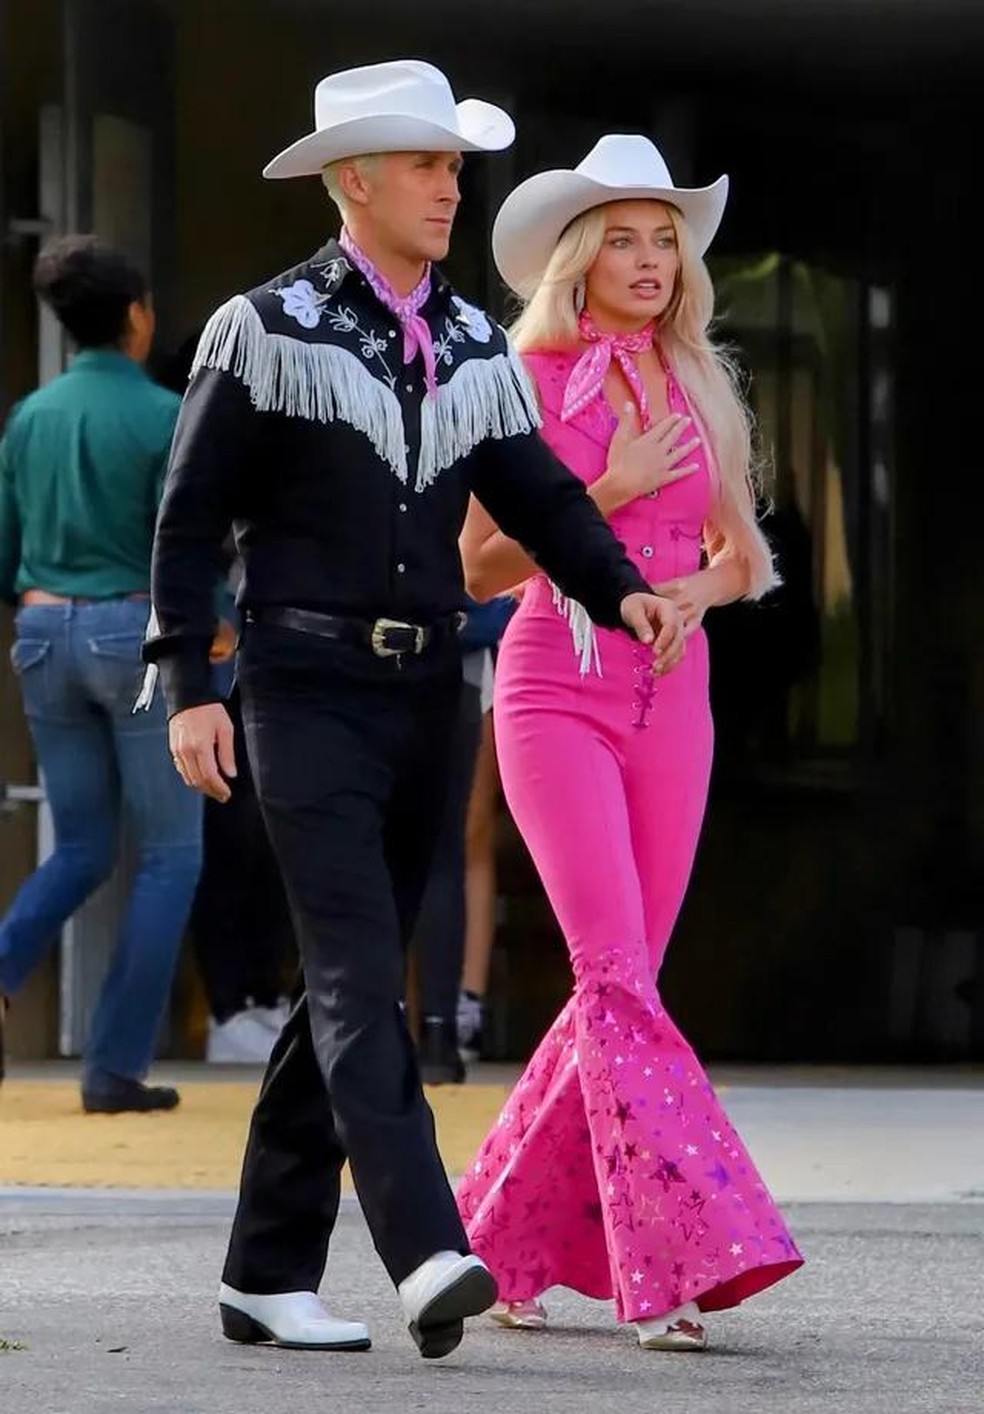 Fato Barbi Movie Margot Robbie's Barbe para mulher, vestido rosa